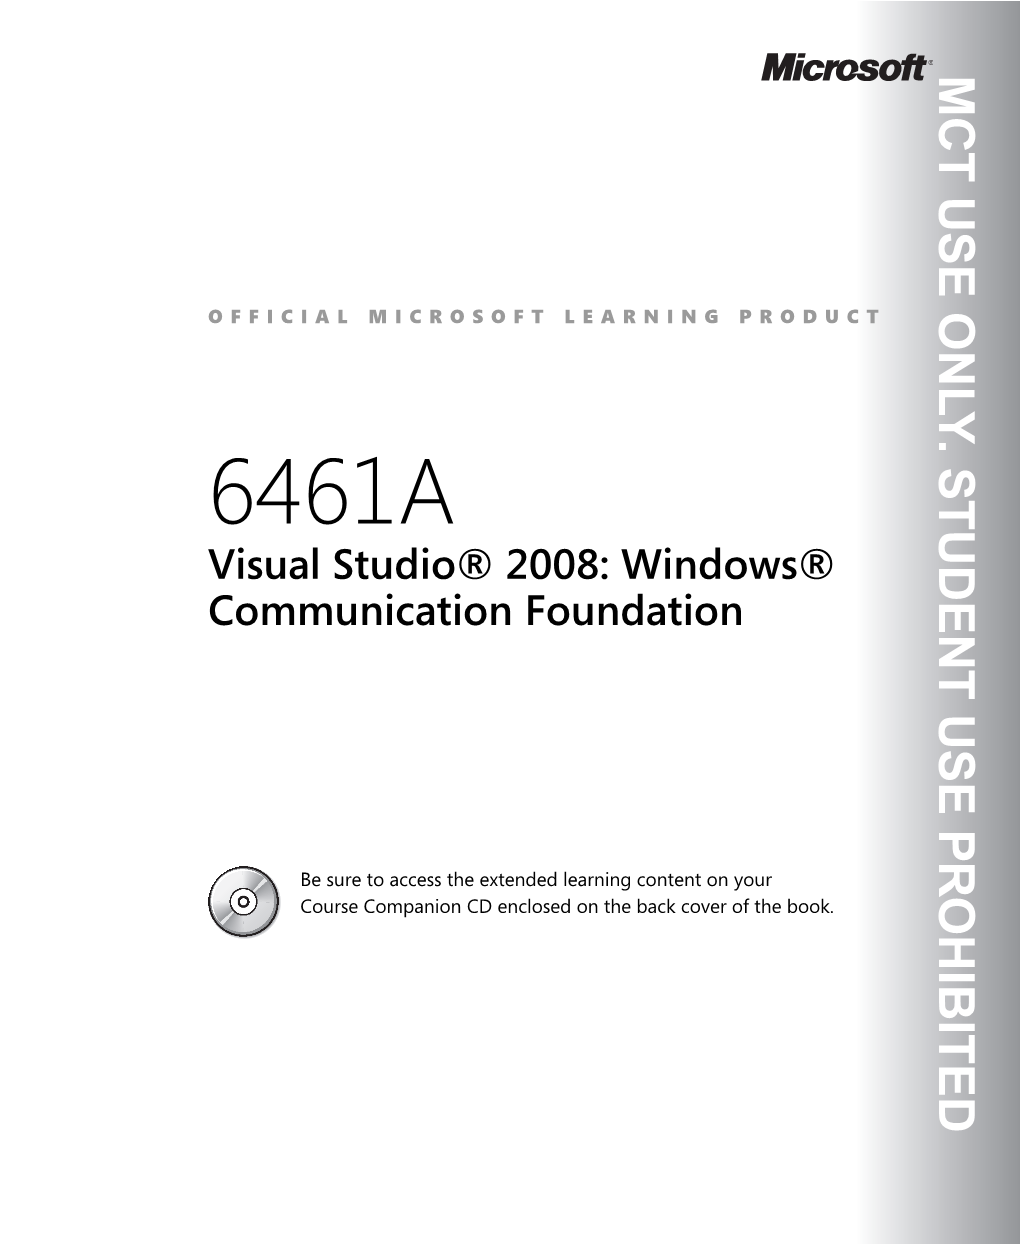 Visual Studio® 2008: Windows® Visual Studio® 2008: Foundation Communication OFFICIAL MICROSOFT LEARNING PRODUCT PRODUCT LEARNING MICROSOFT OFFICIAL 6461A MCT USE ONLY